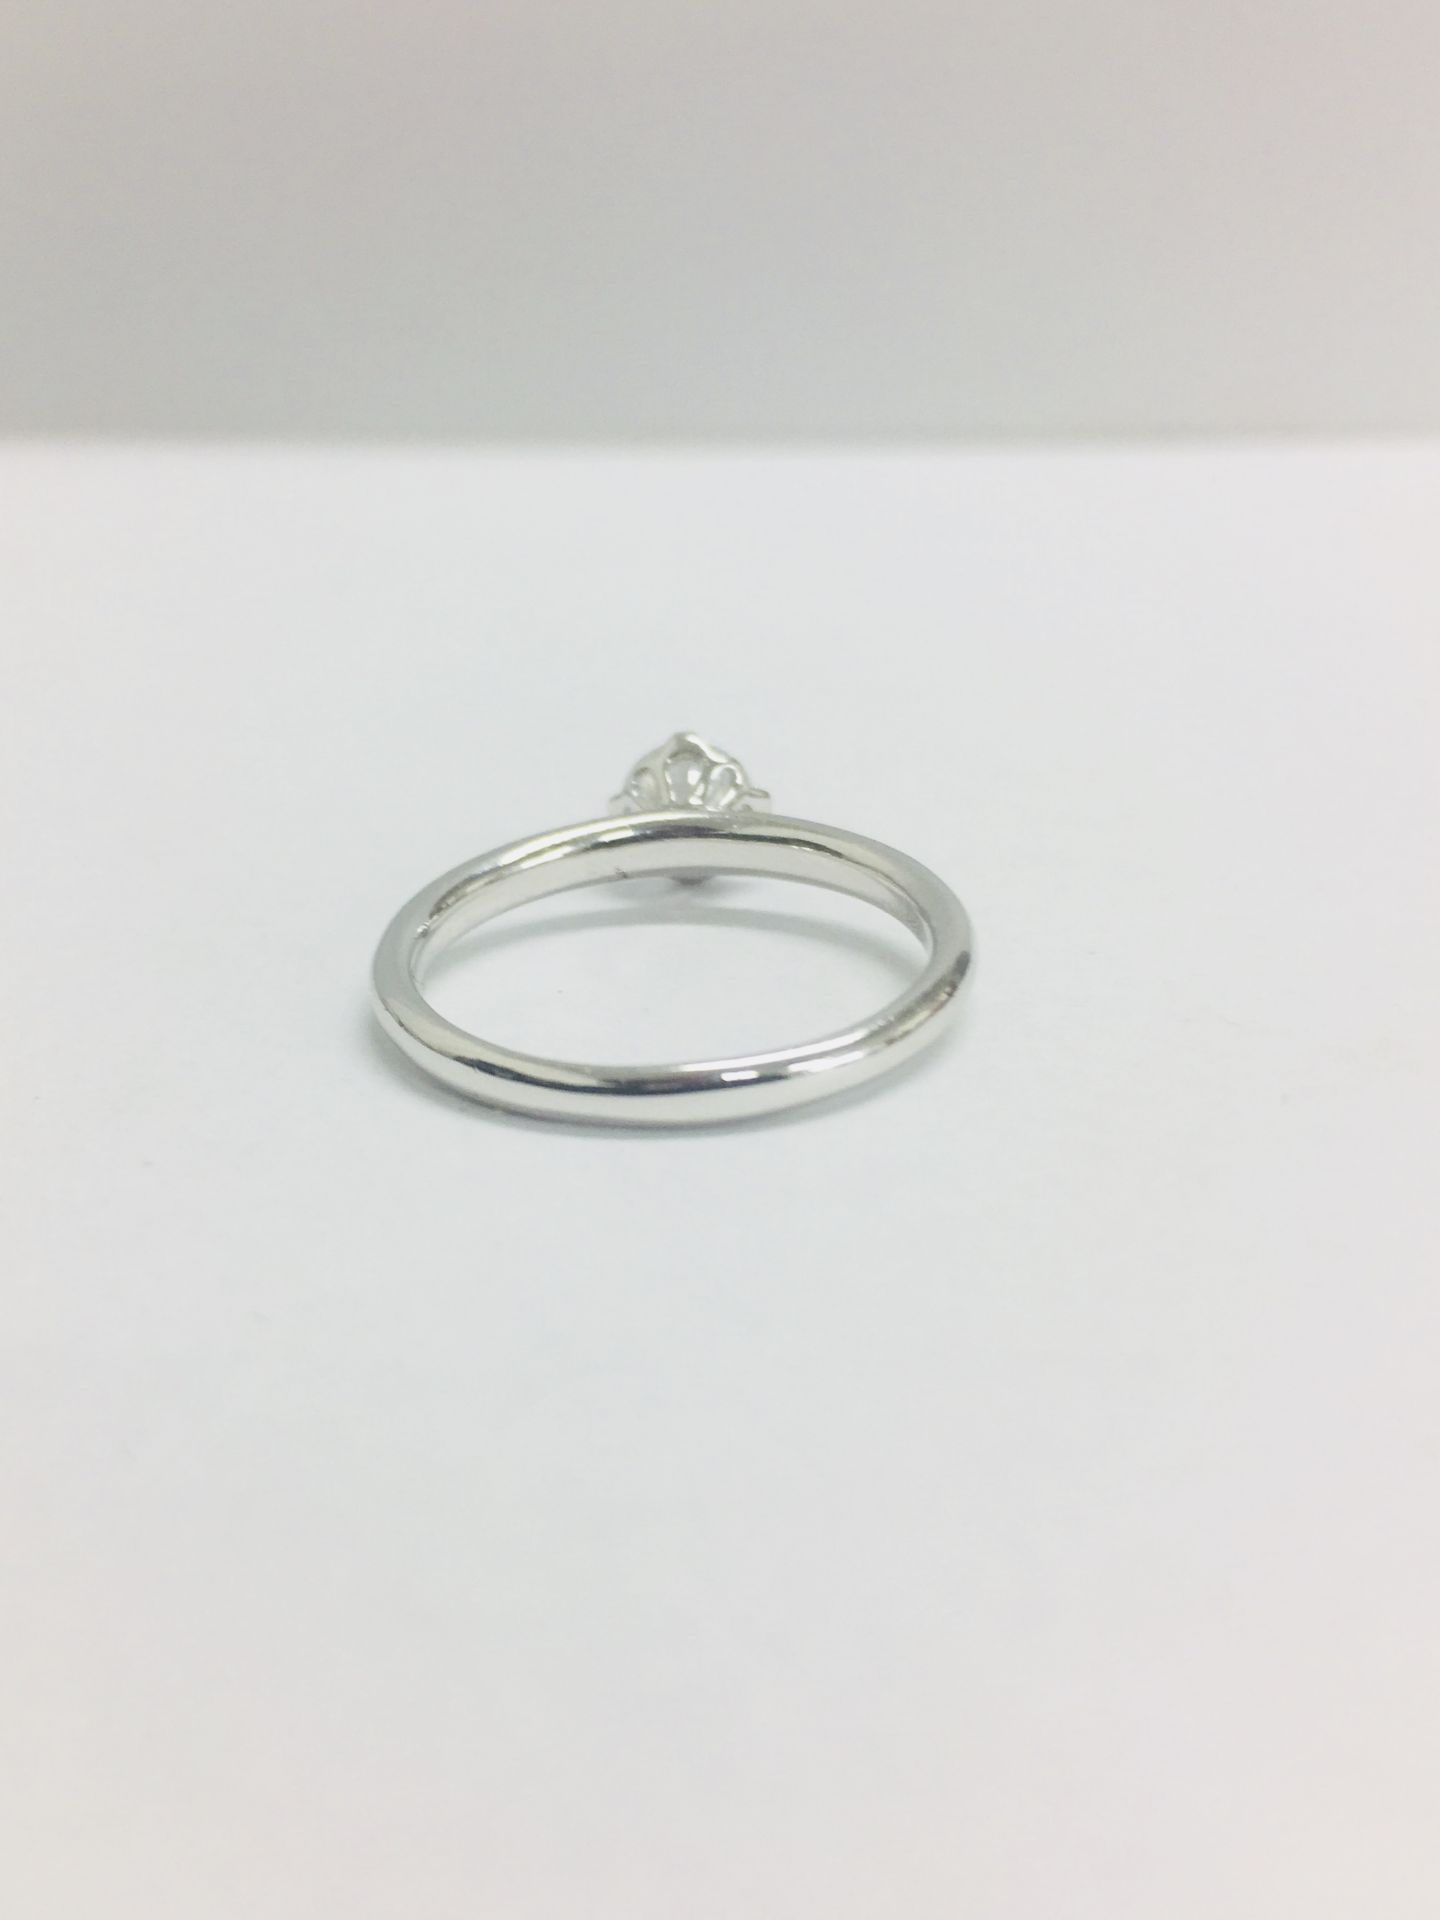 Platinum diamond solitaire ring,050ct h colour vs clarity natural diamond - Image 4 of 6